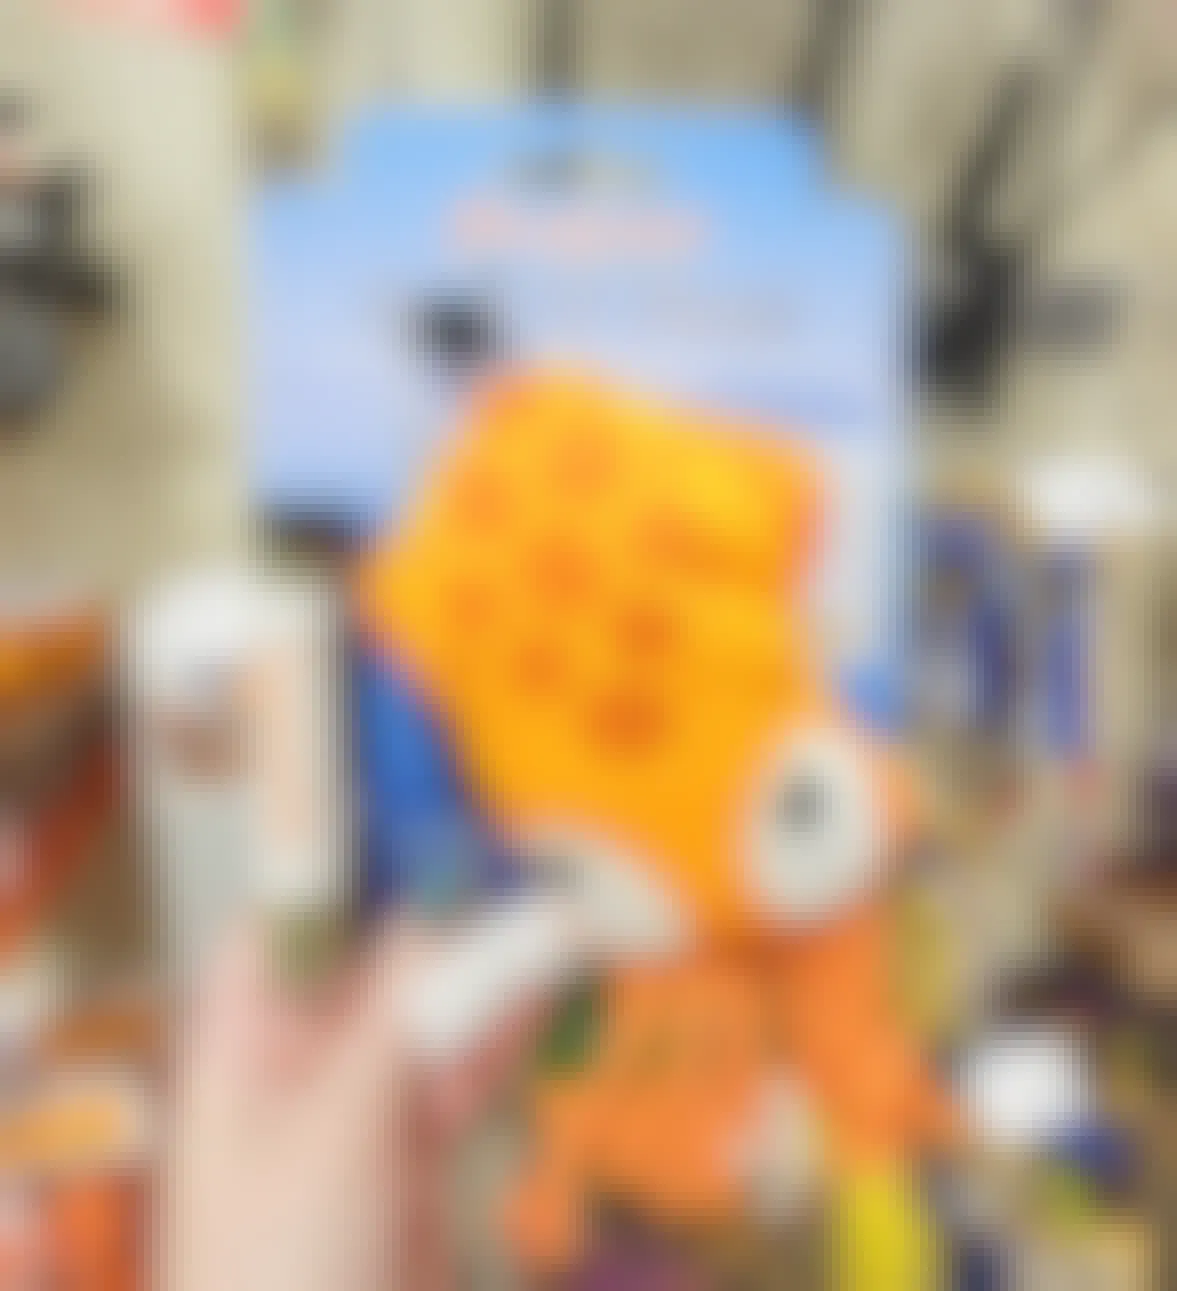 hand holding a catnip orange octopus toy